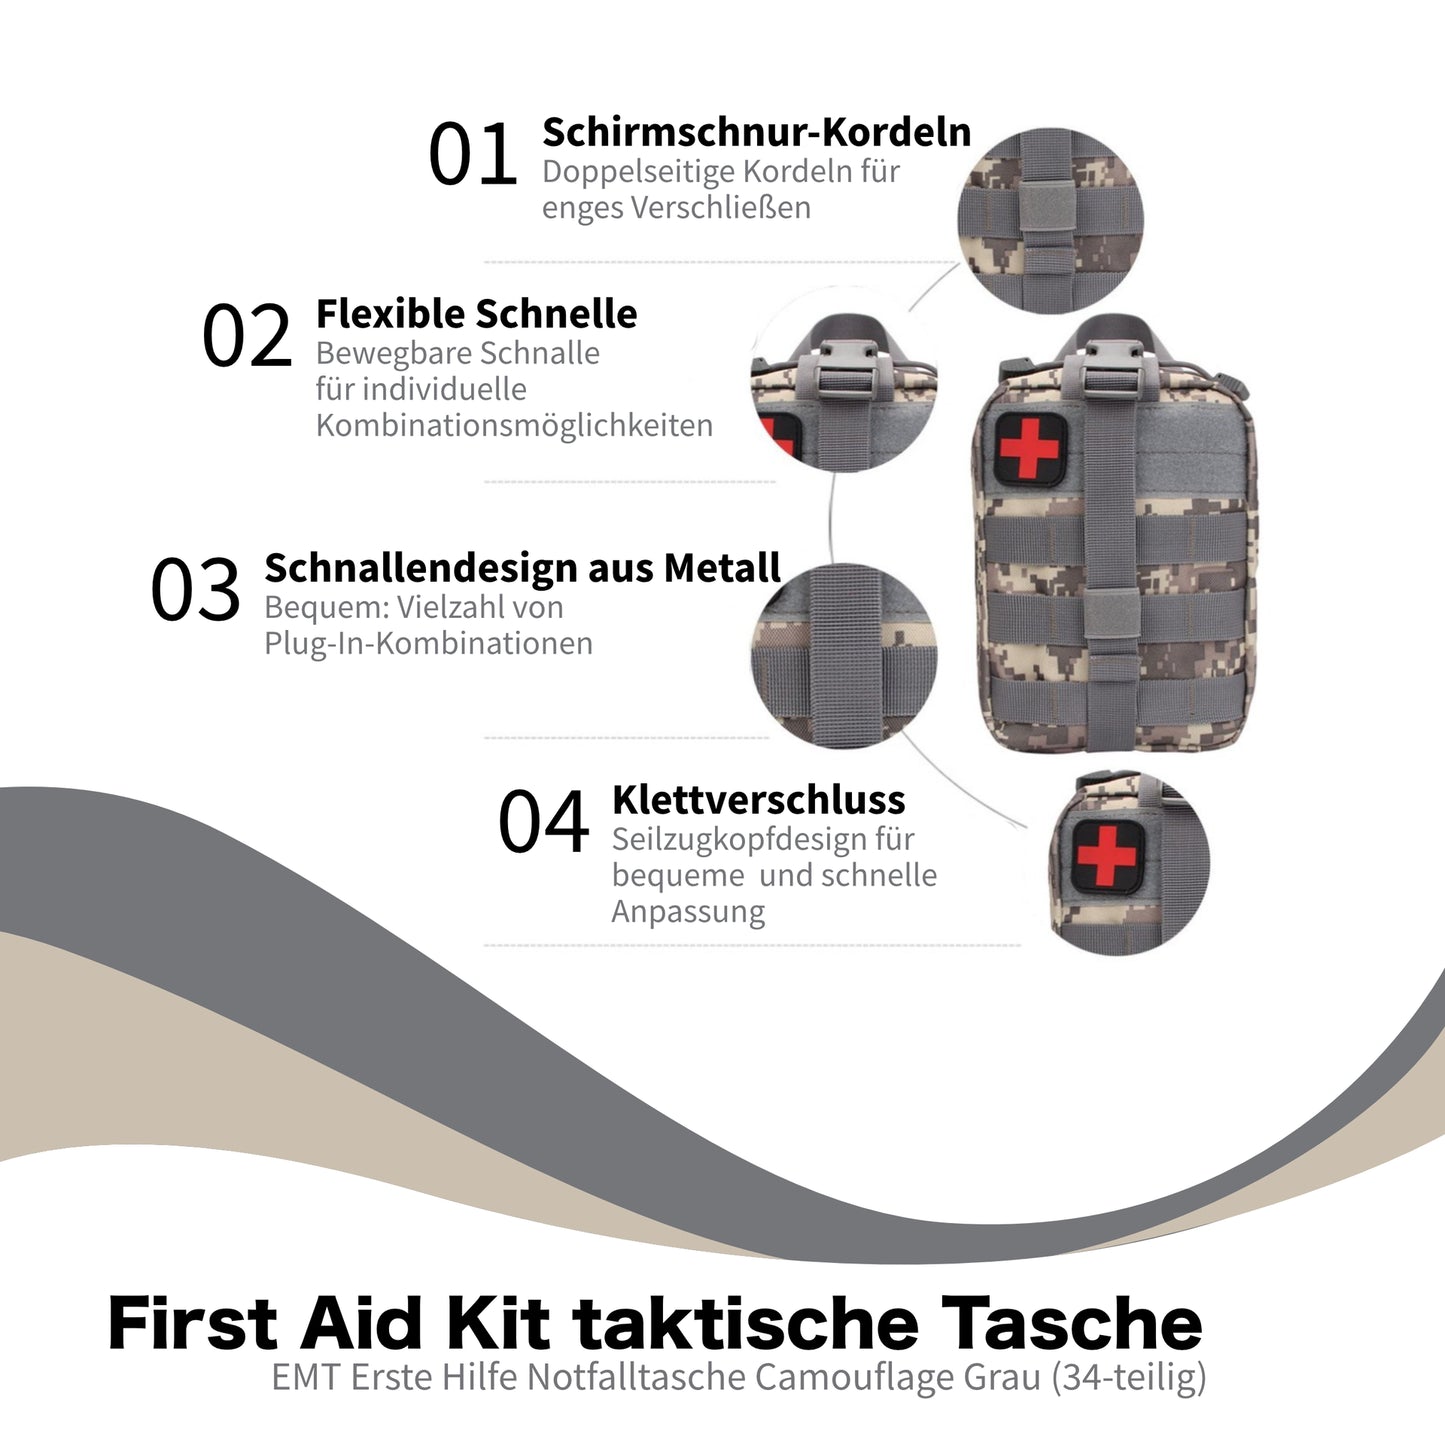 First Aid Kit - 34 pieces - IFAK Kit - Emergency Set/Emergency Kit - First Aid Kit